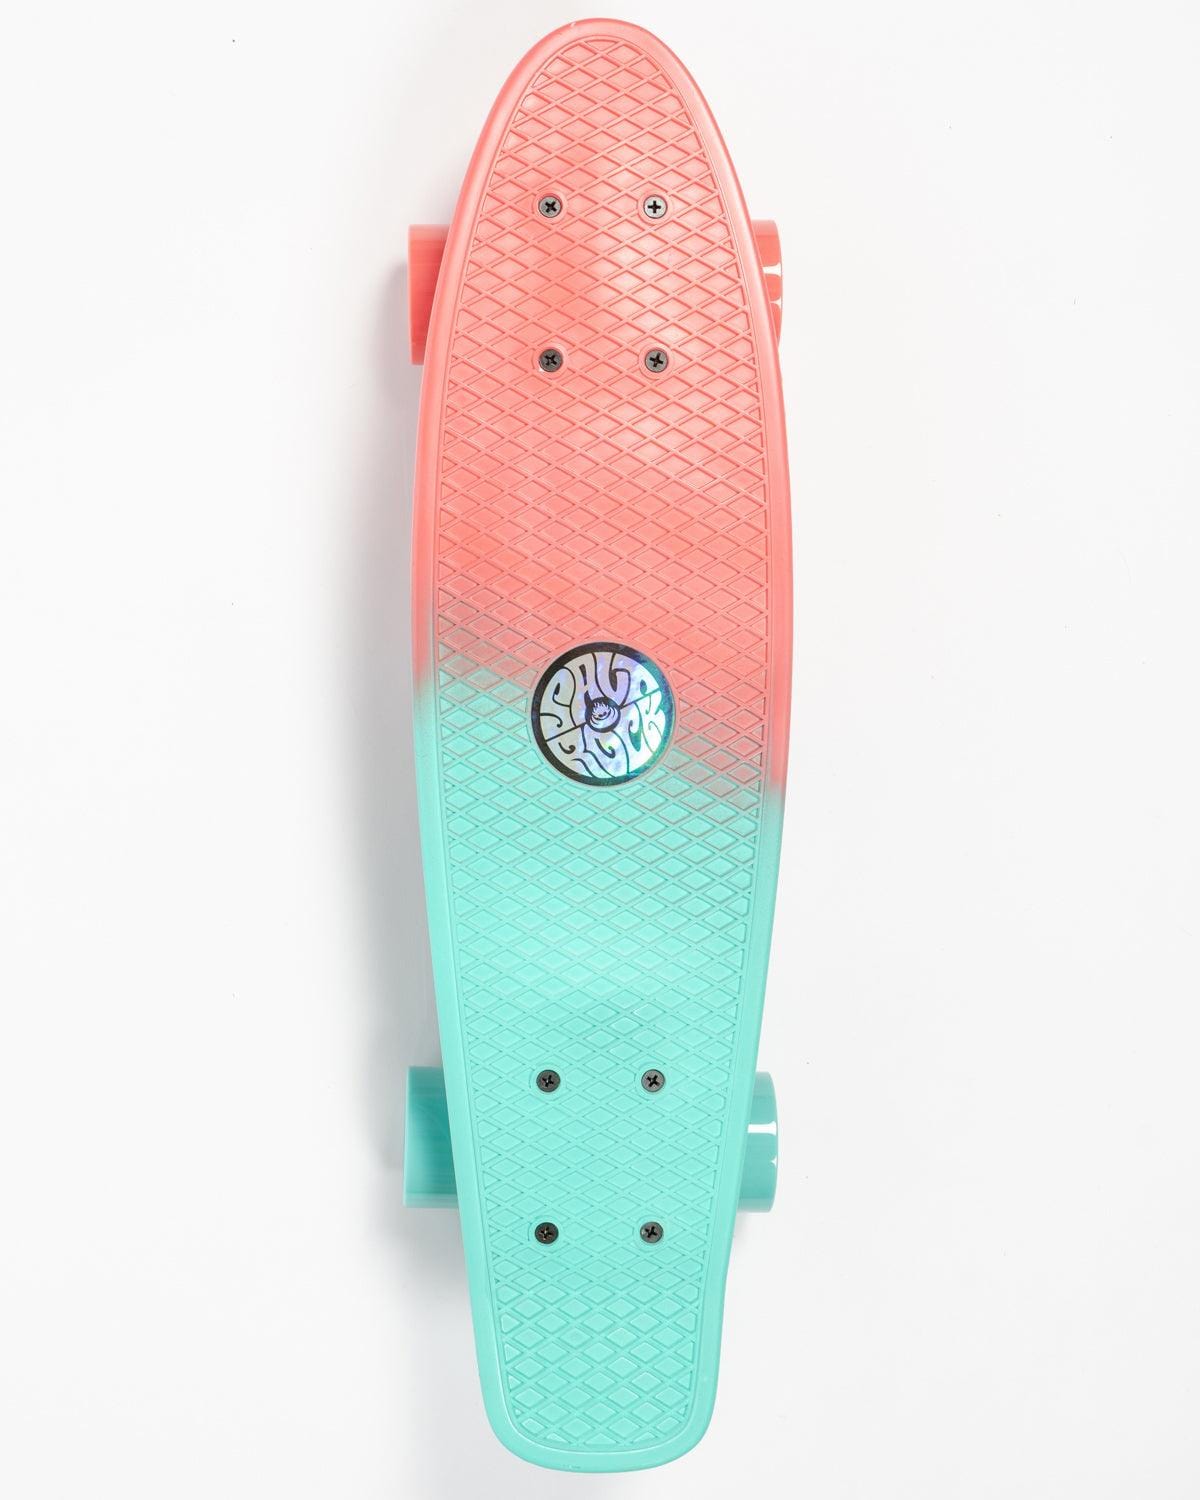 Retroride - Mini Skateboard - Coral/Turquoise - Saltrock